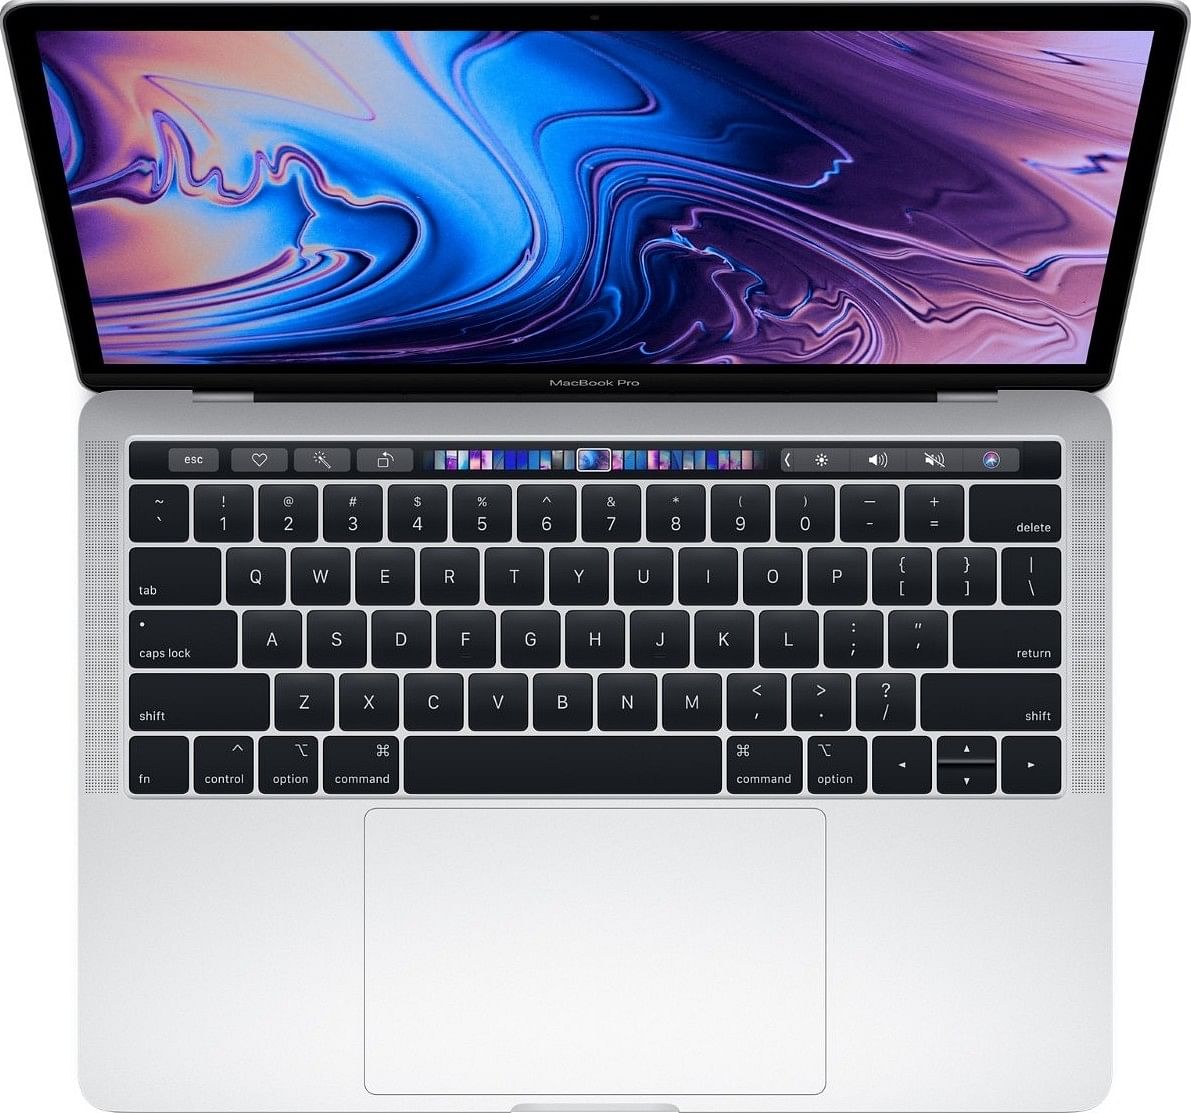 Apple MacBook Pro A1989 (2018) Core i5 8GB RAM 256 SSD 1.5GB Graphic - Card Silver